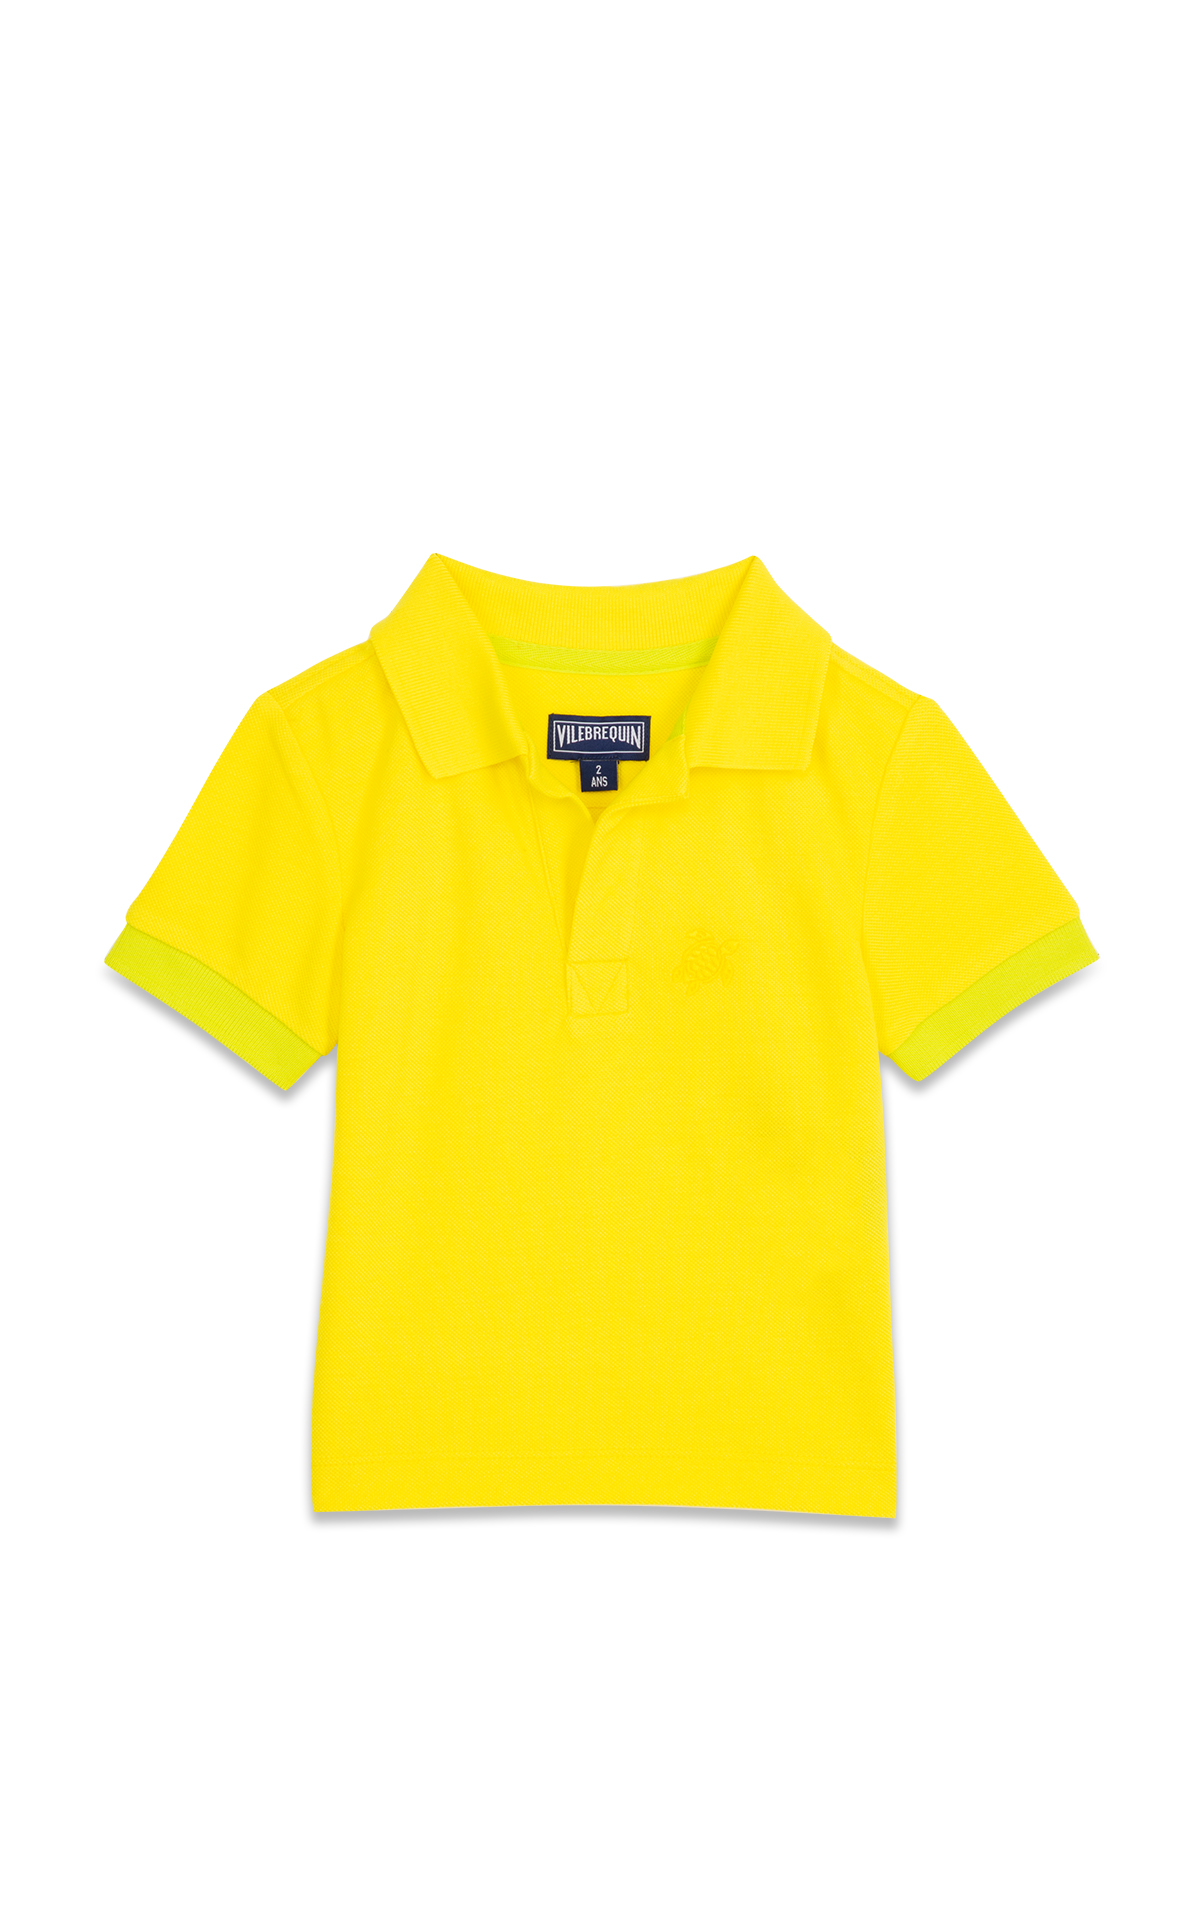 La Vallée Village Vilebrequin Boys' yellow polo shirt